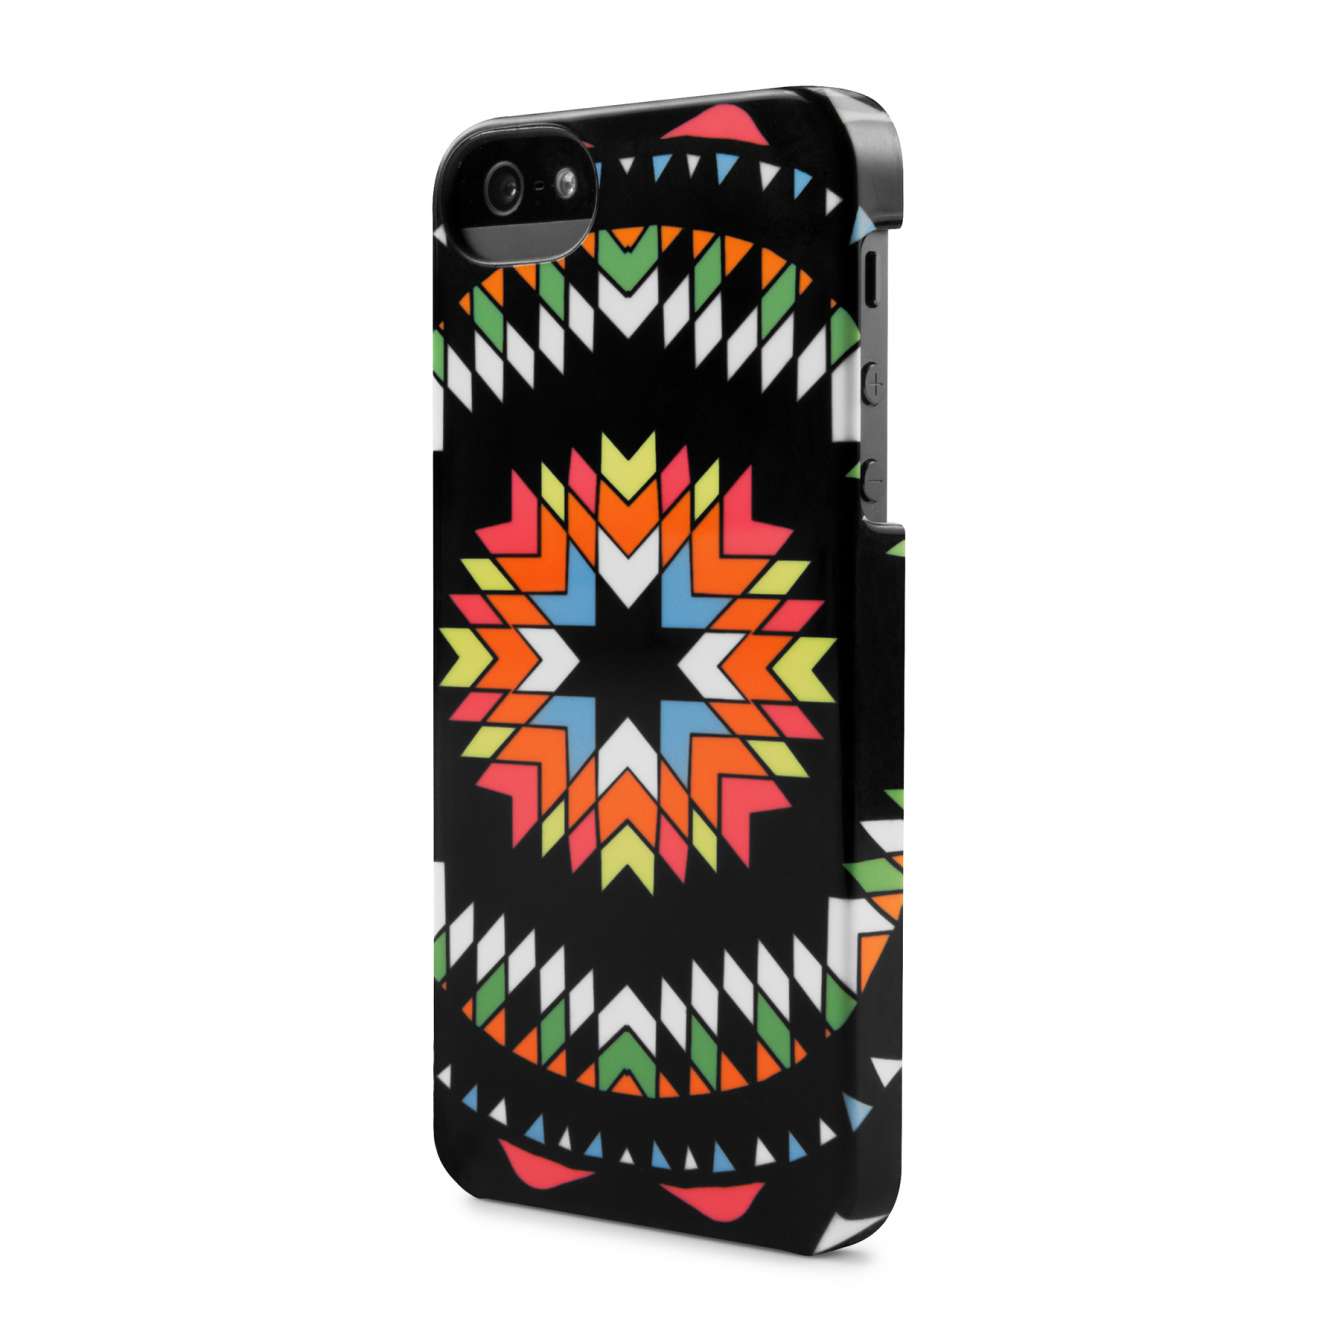 Mara Hoffman x Incase iPhone 5 Snap Cases-2